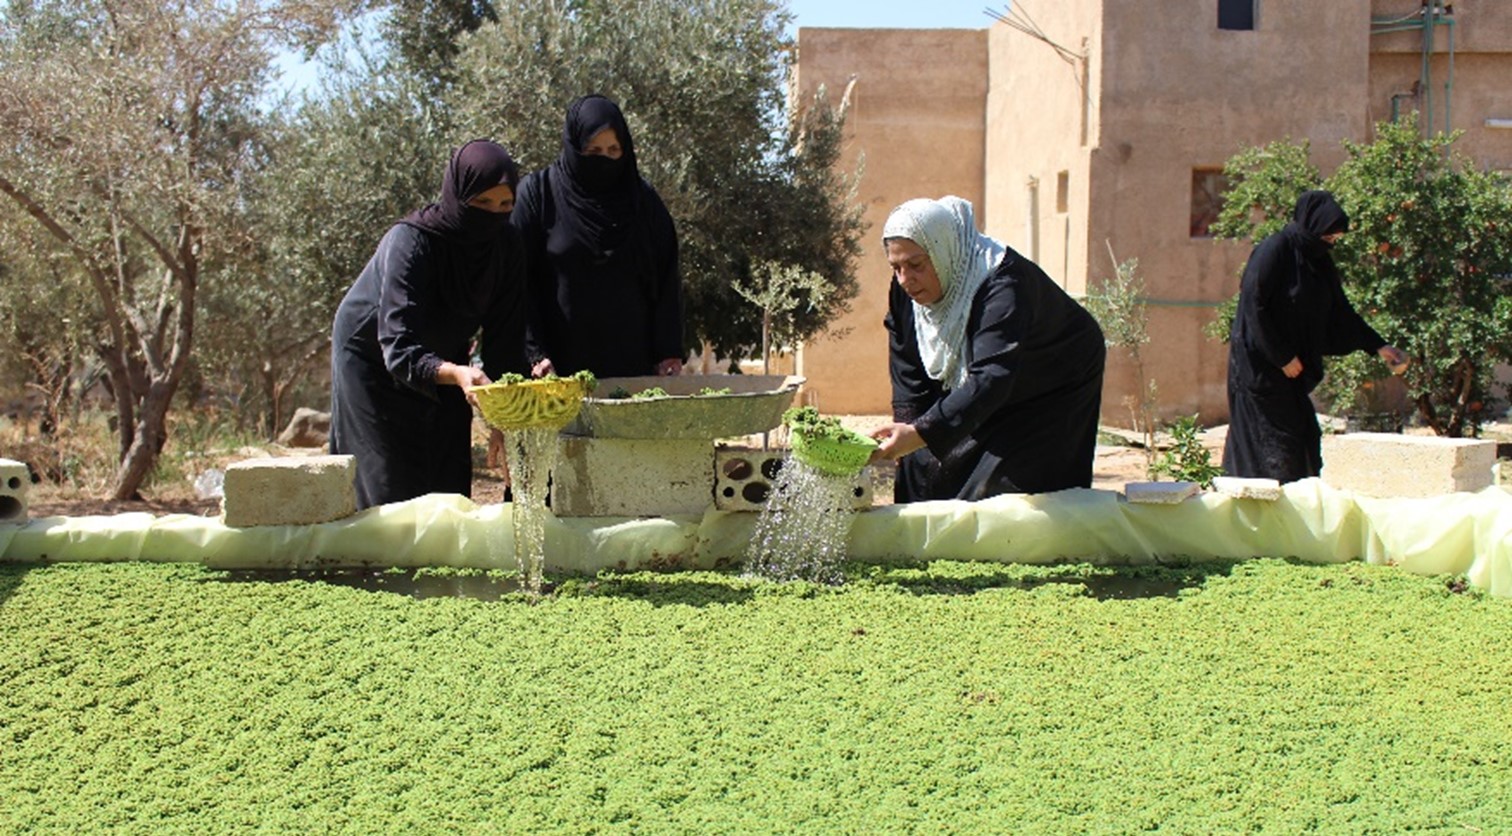 Force Chudai - Jordan: Women's economic empowerment through azolla farming